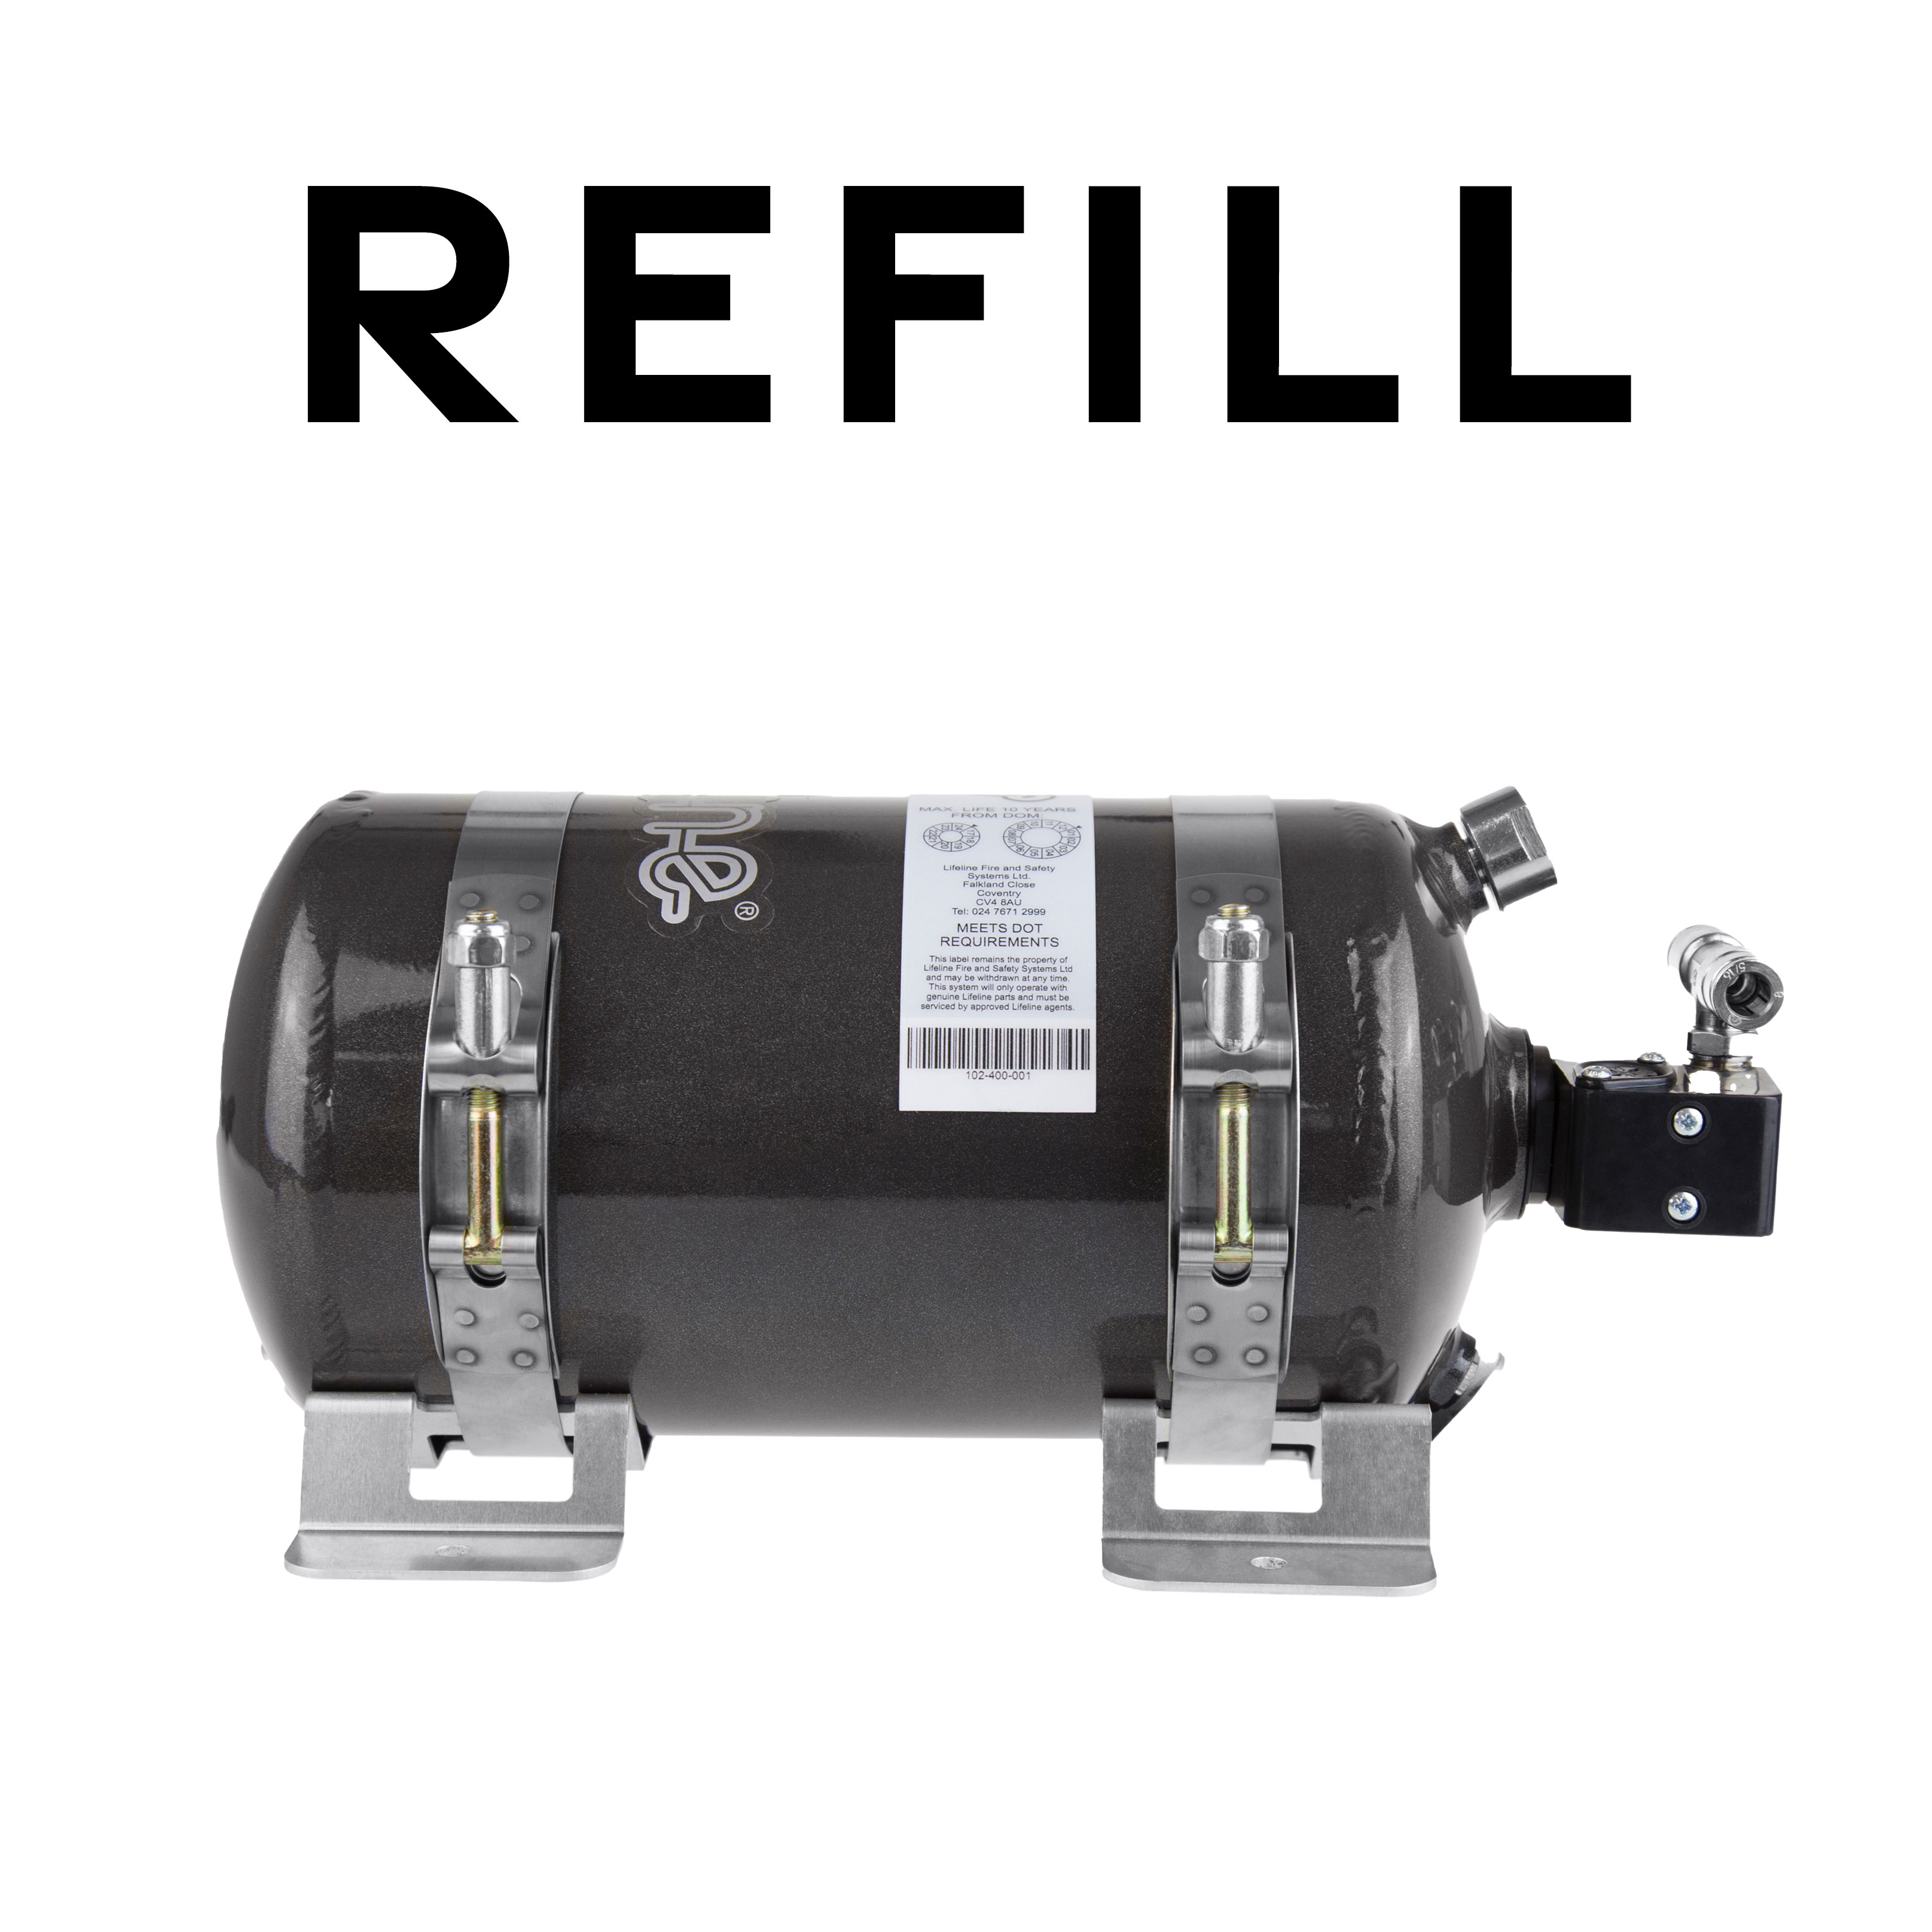 Refill - Lifeline Zero 360 FIA Novec 1230 3.0KG Elelctrical Fire Extinguisher